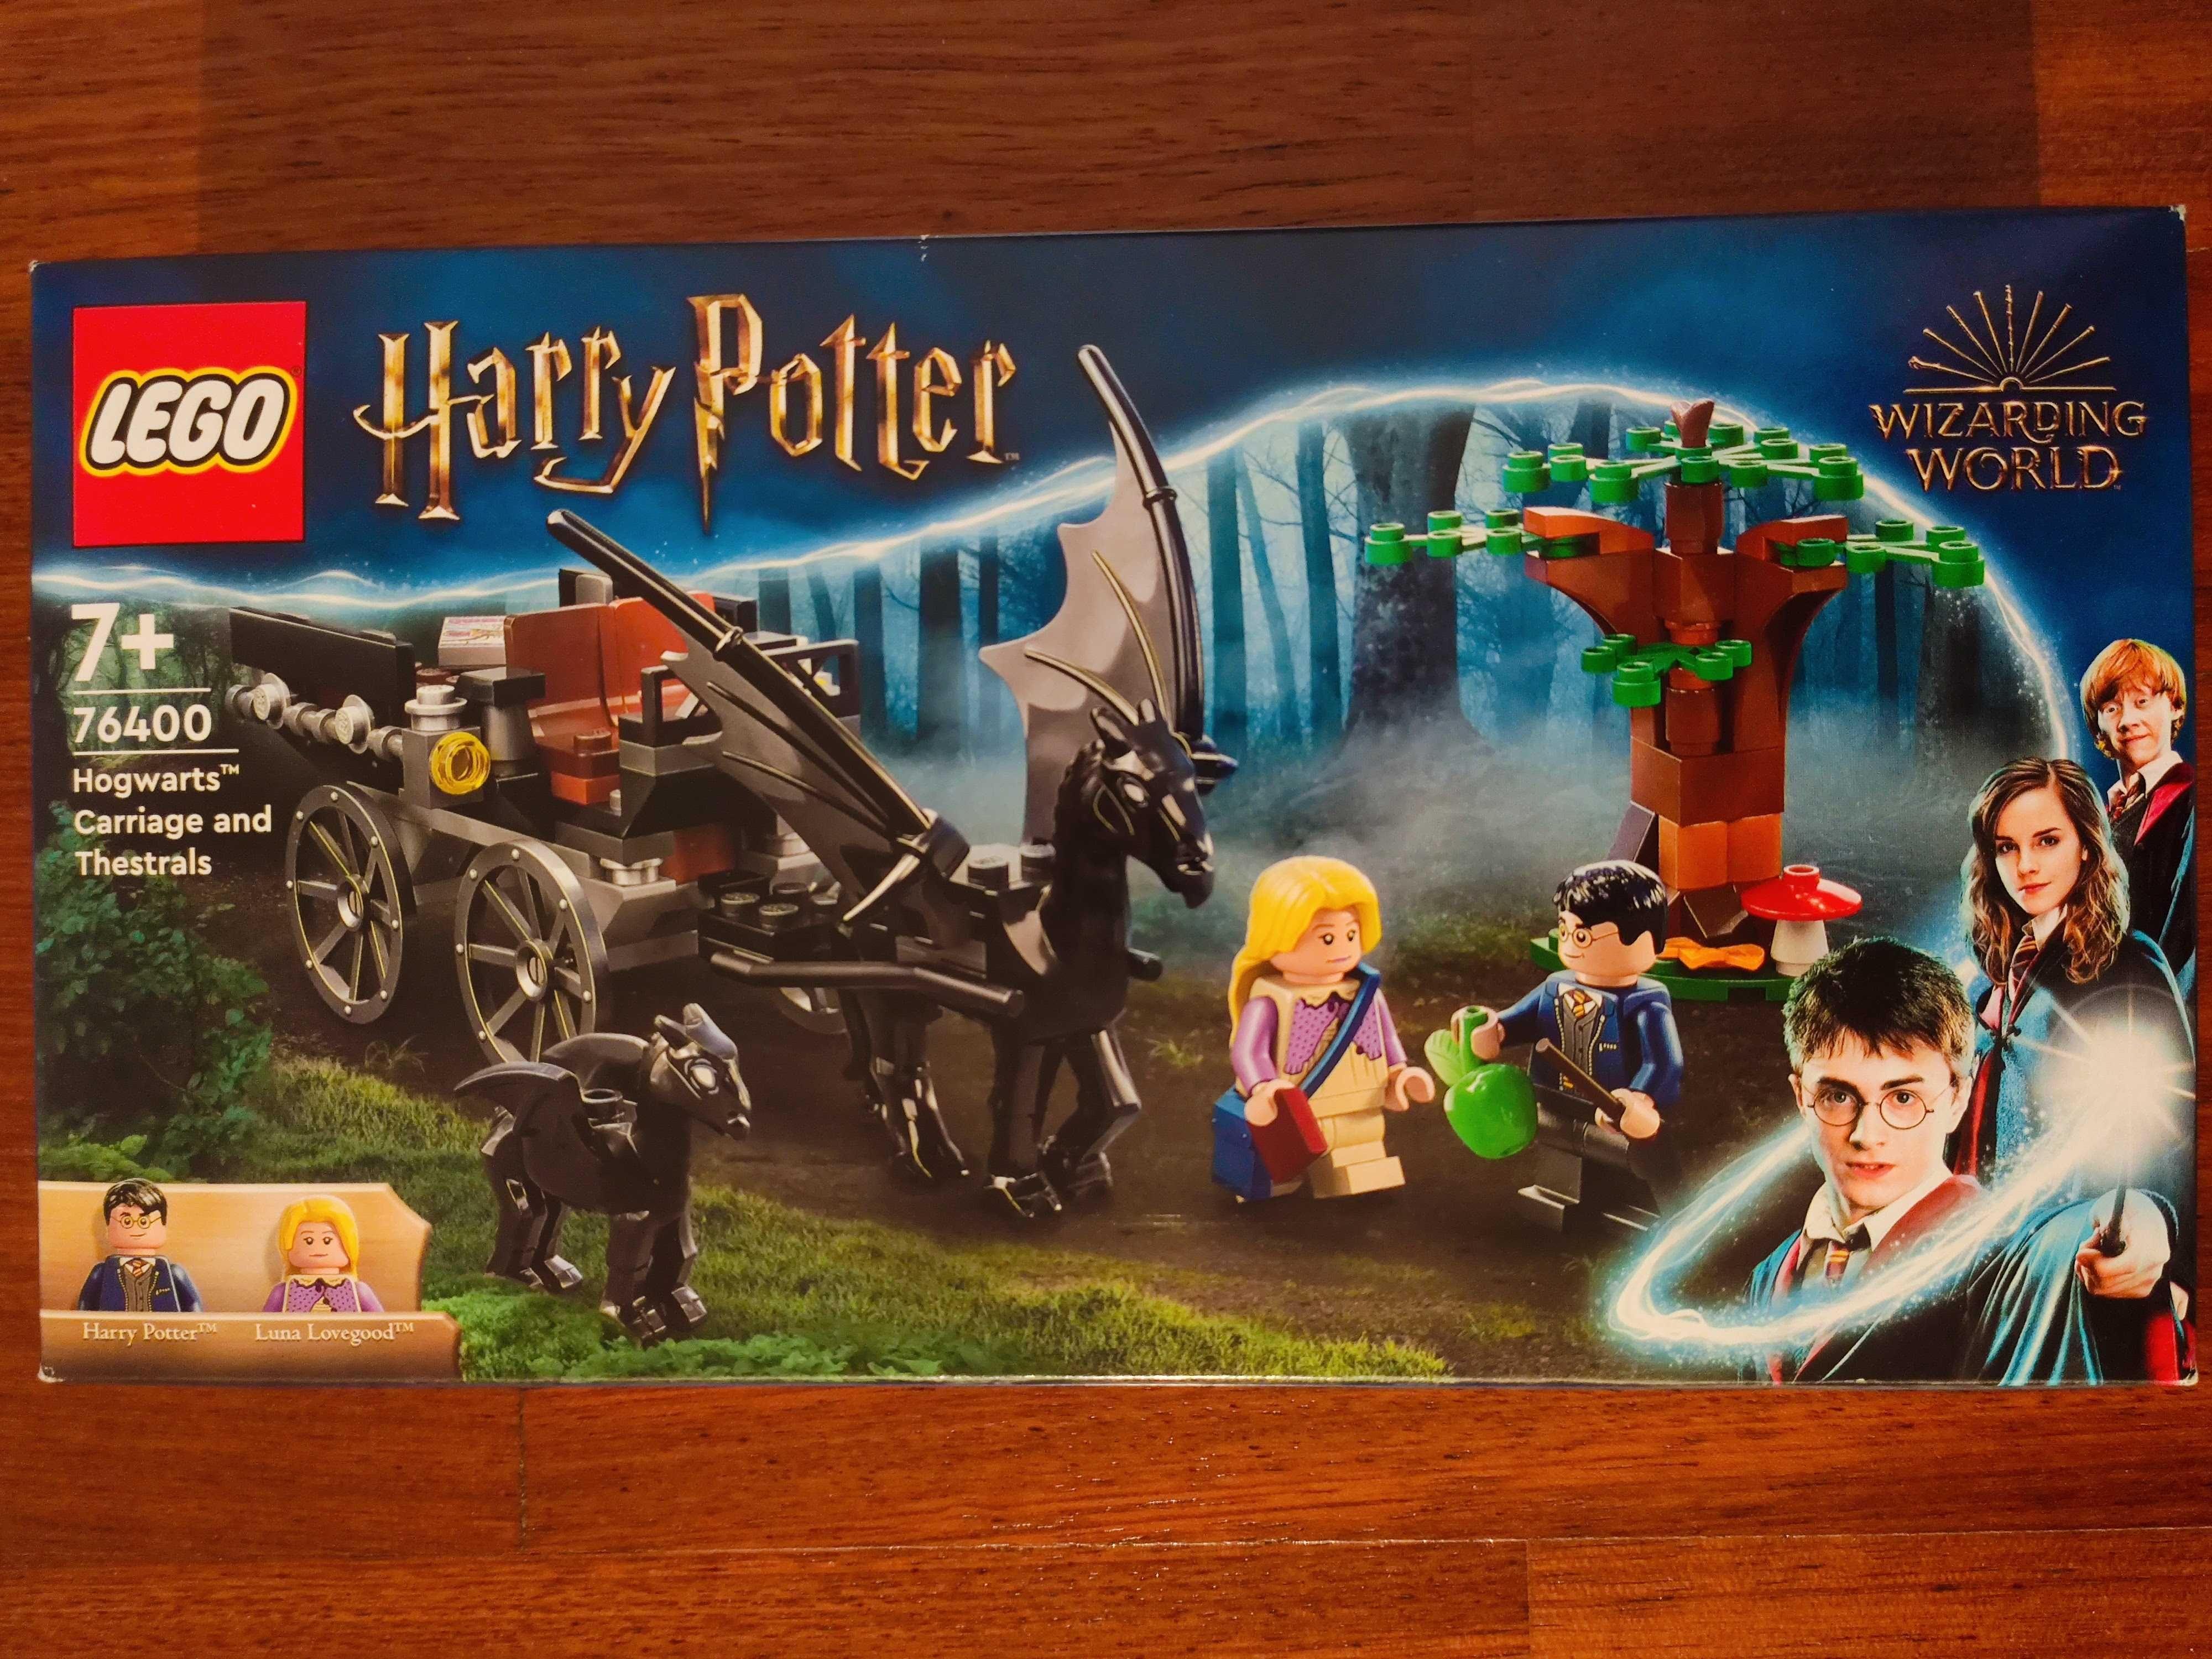 LEGO Jogo de Xadrez dos Feiticeiros de Hogwarts 76392